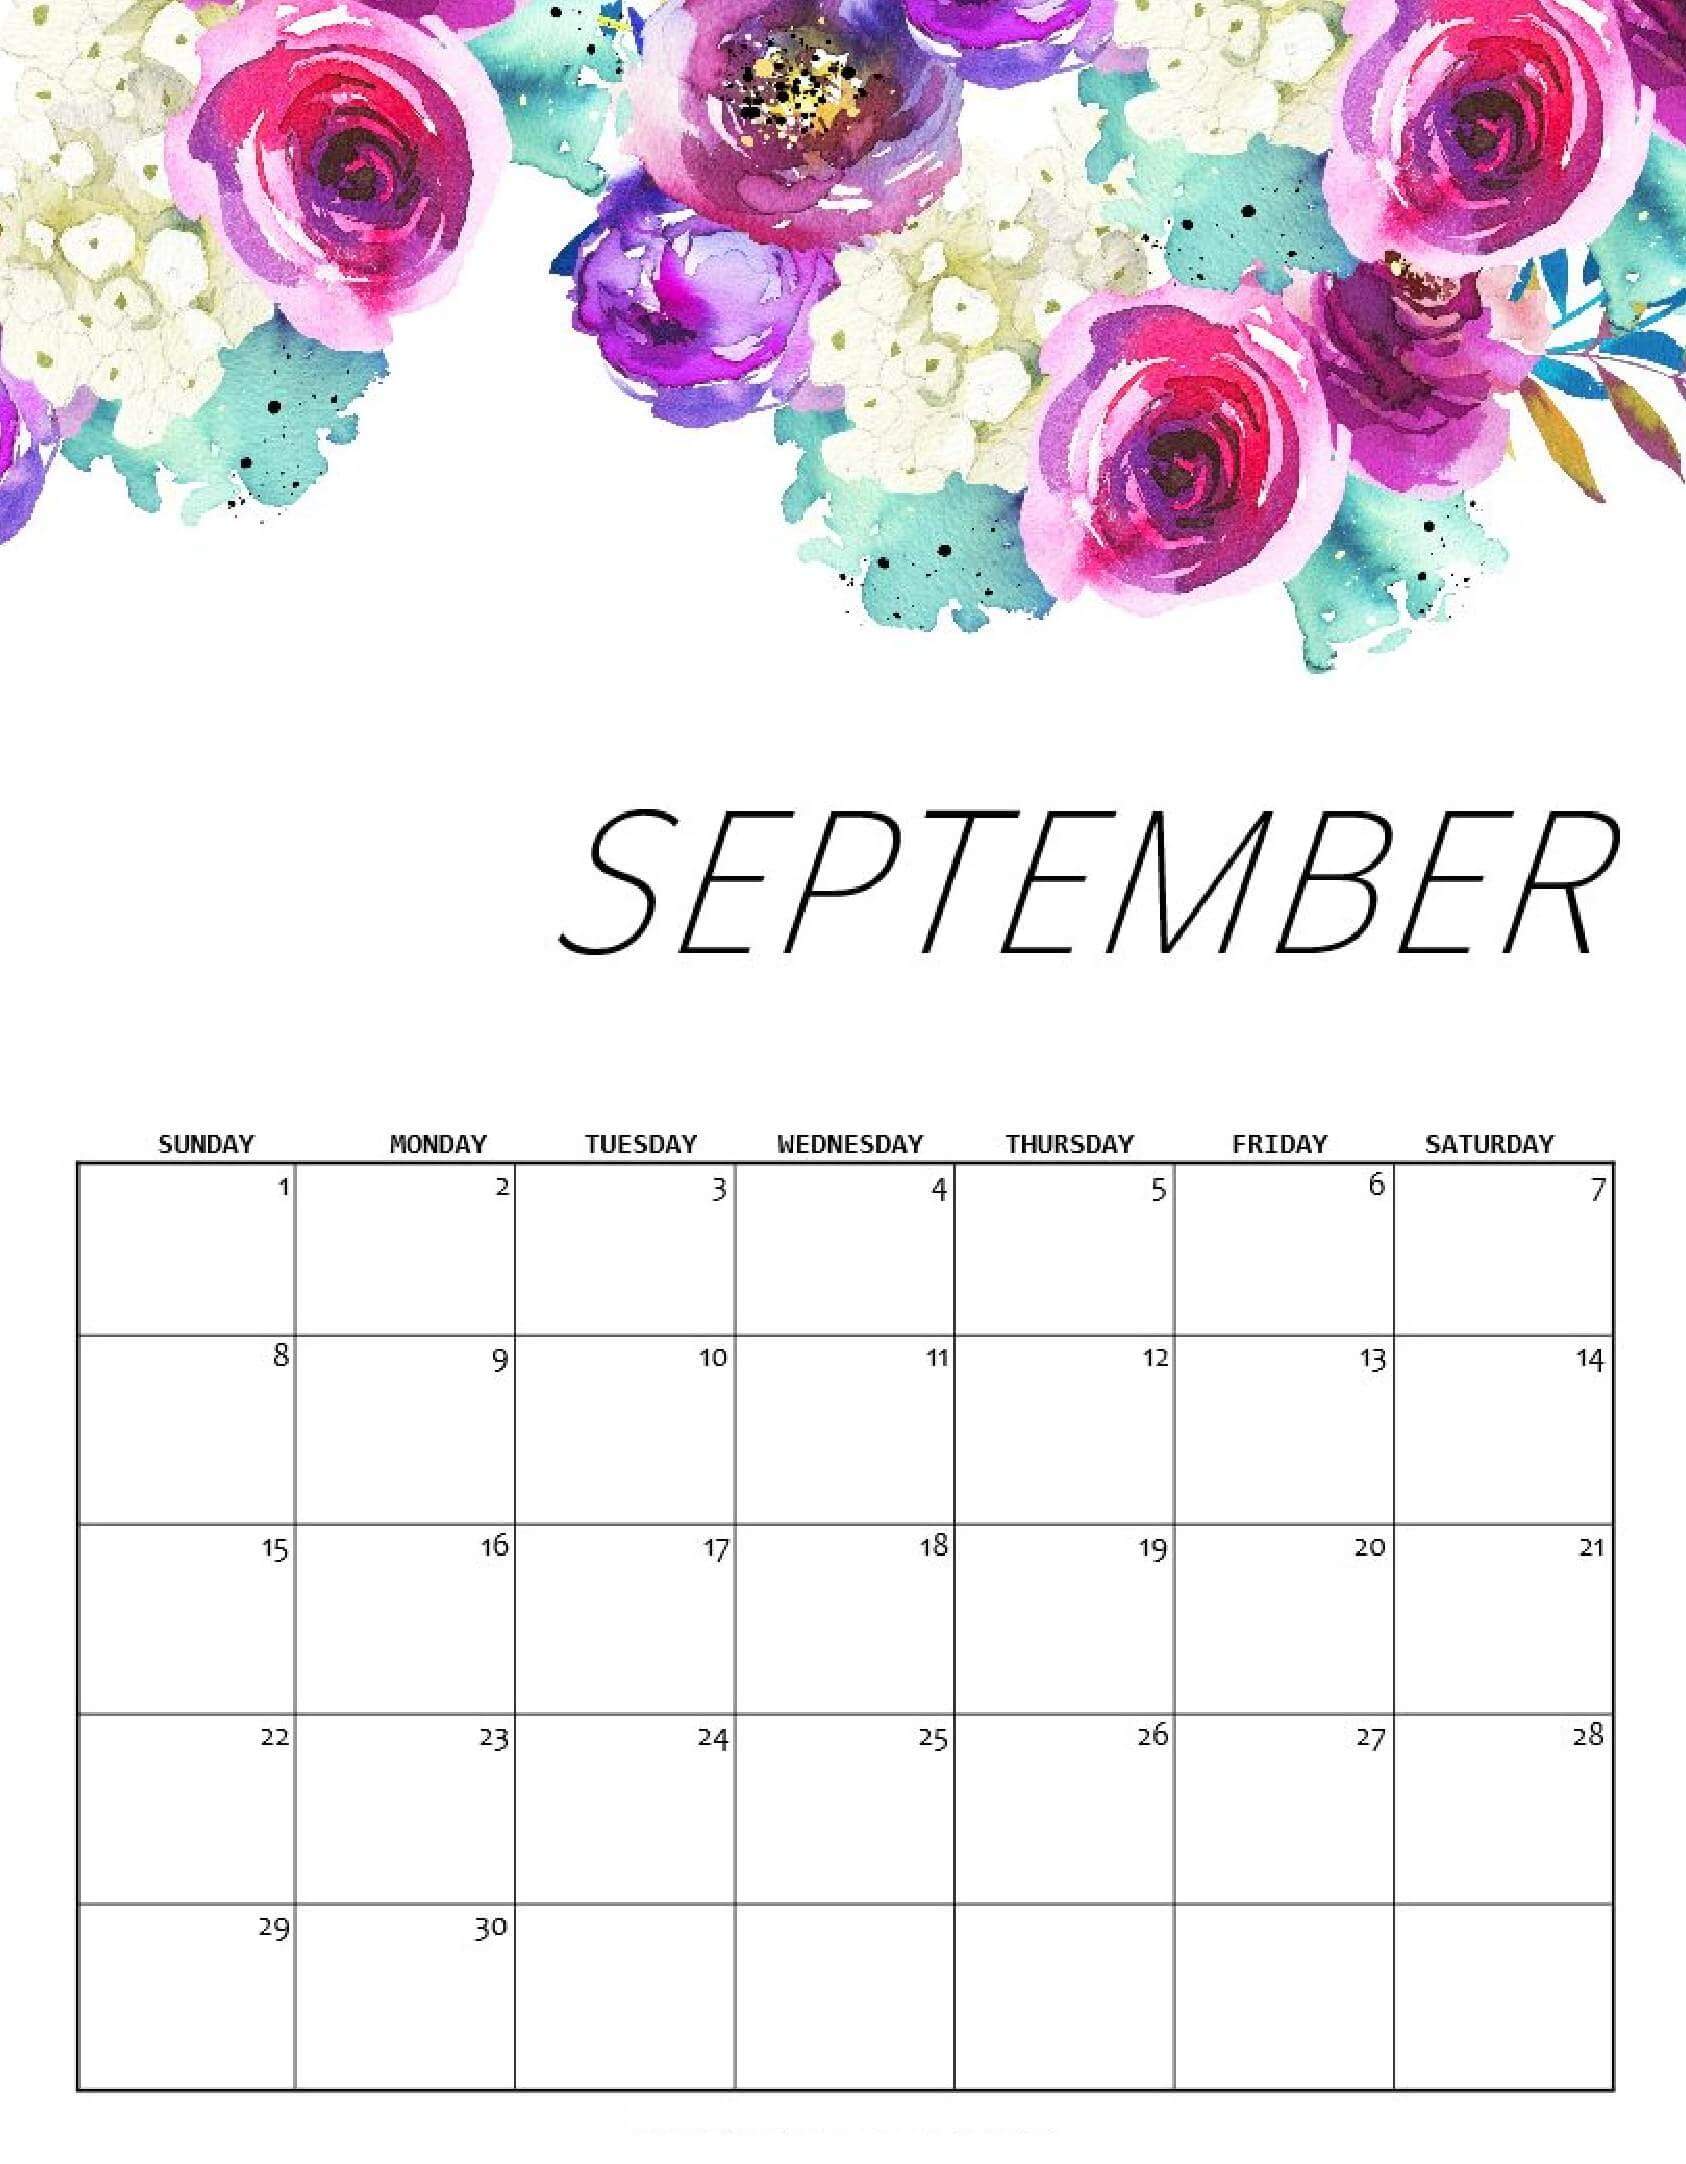 Cute September 2019 Calendar Wallpapers Image